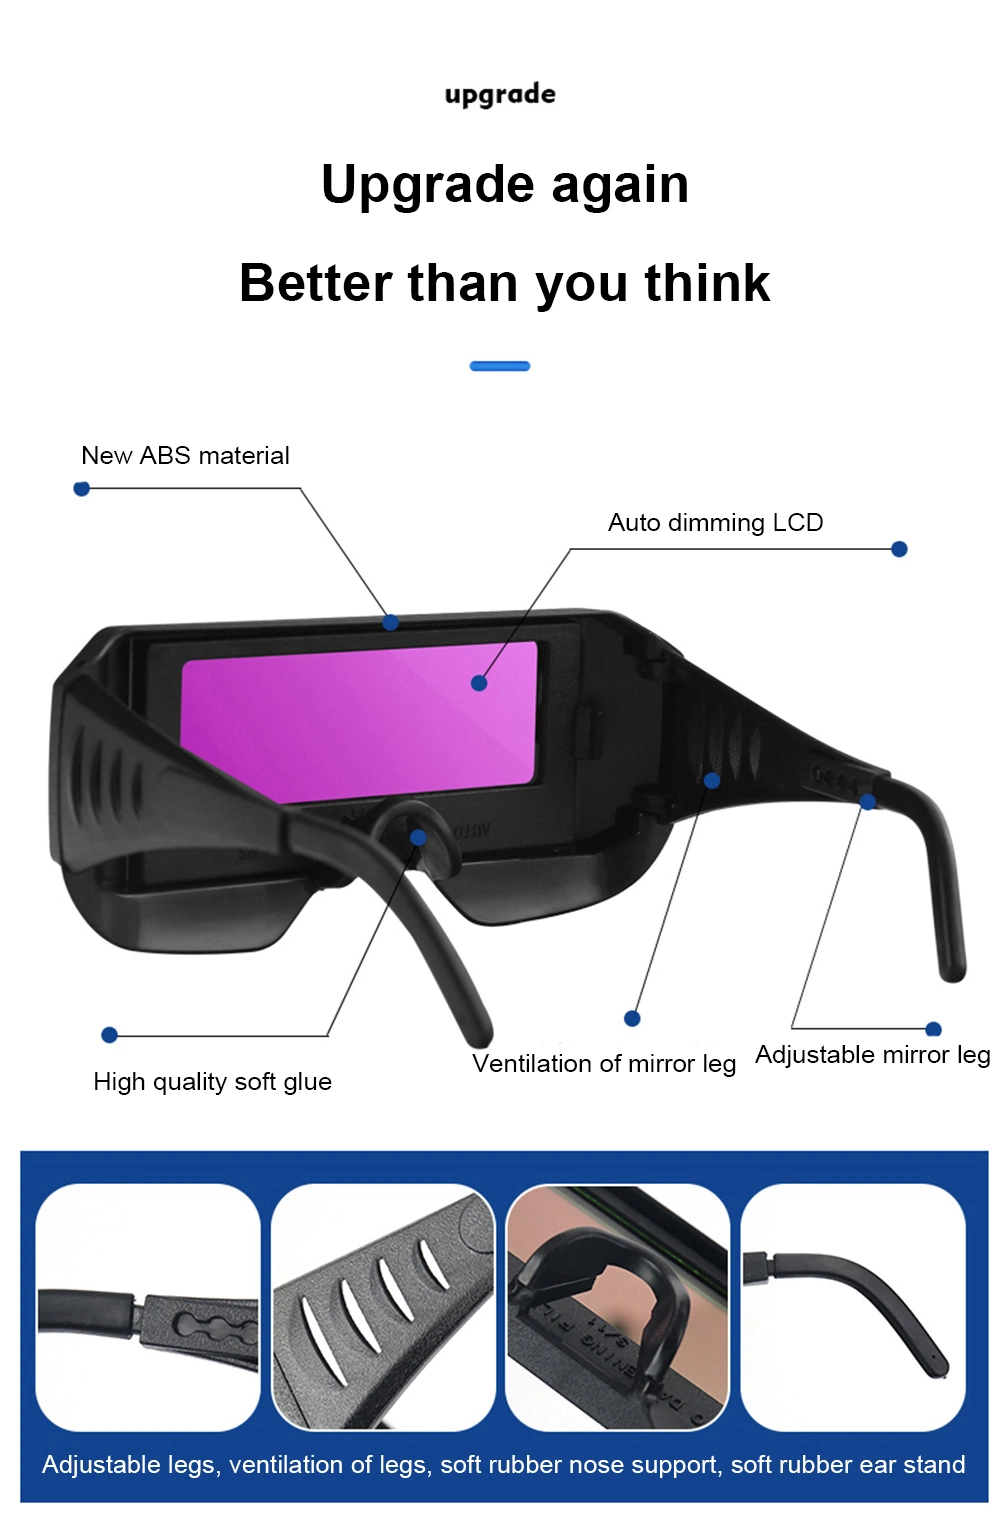 Solar Power Auto-Darkening Welding Safety Glasses with Lithium Battery